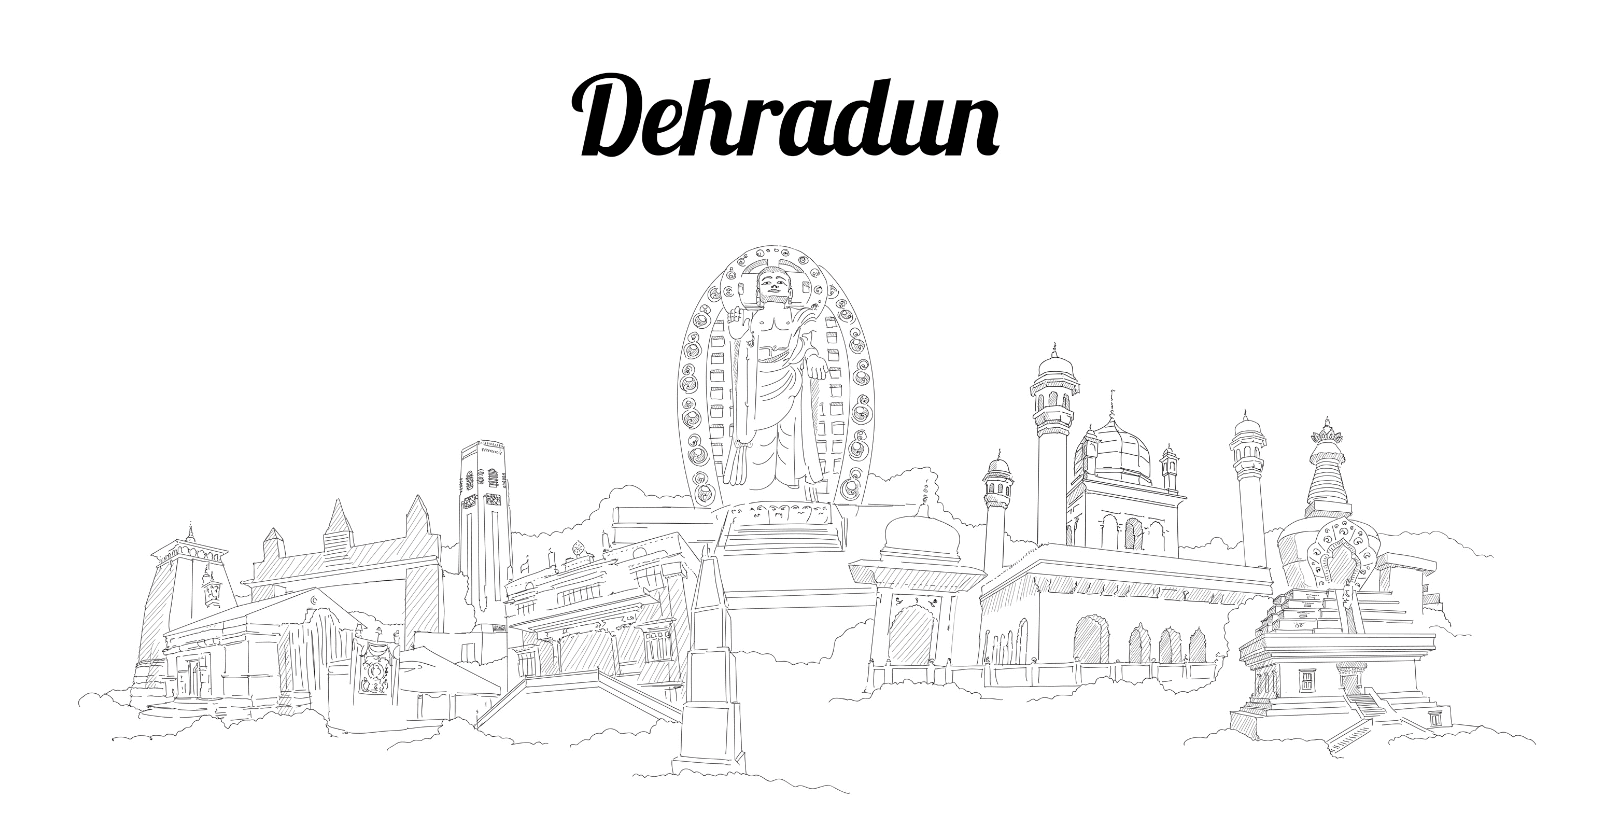 driving-licence-dehradun